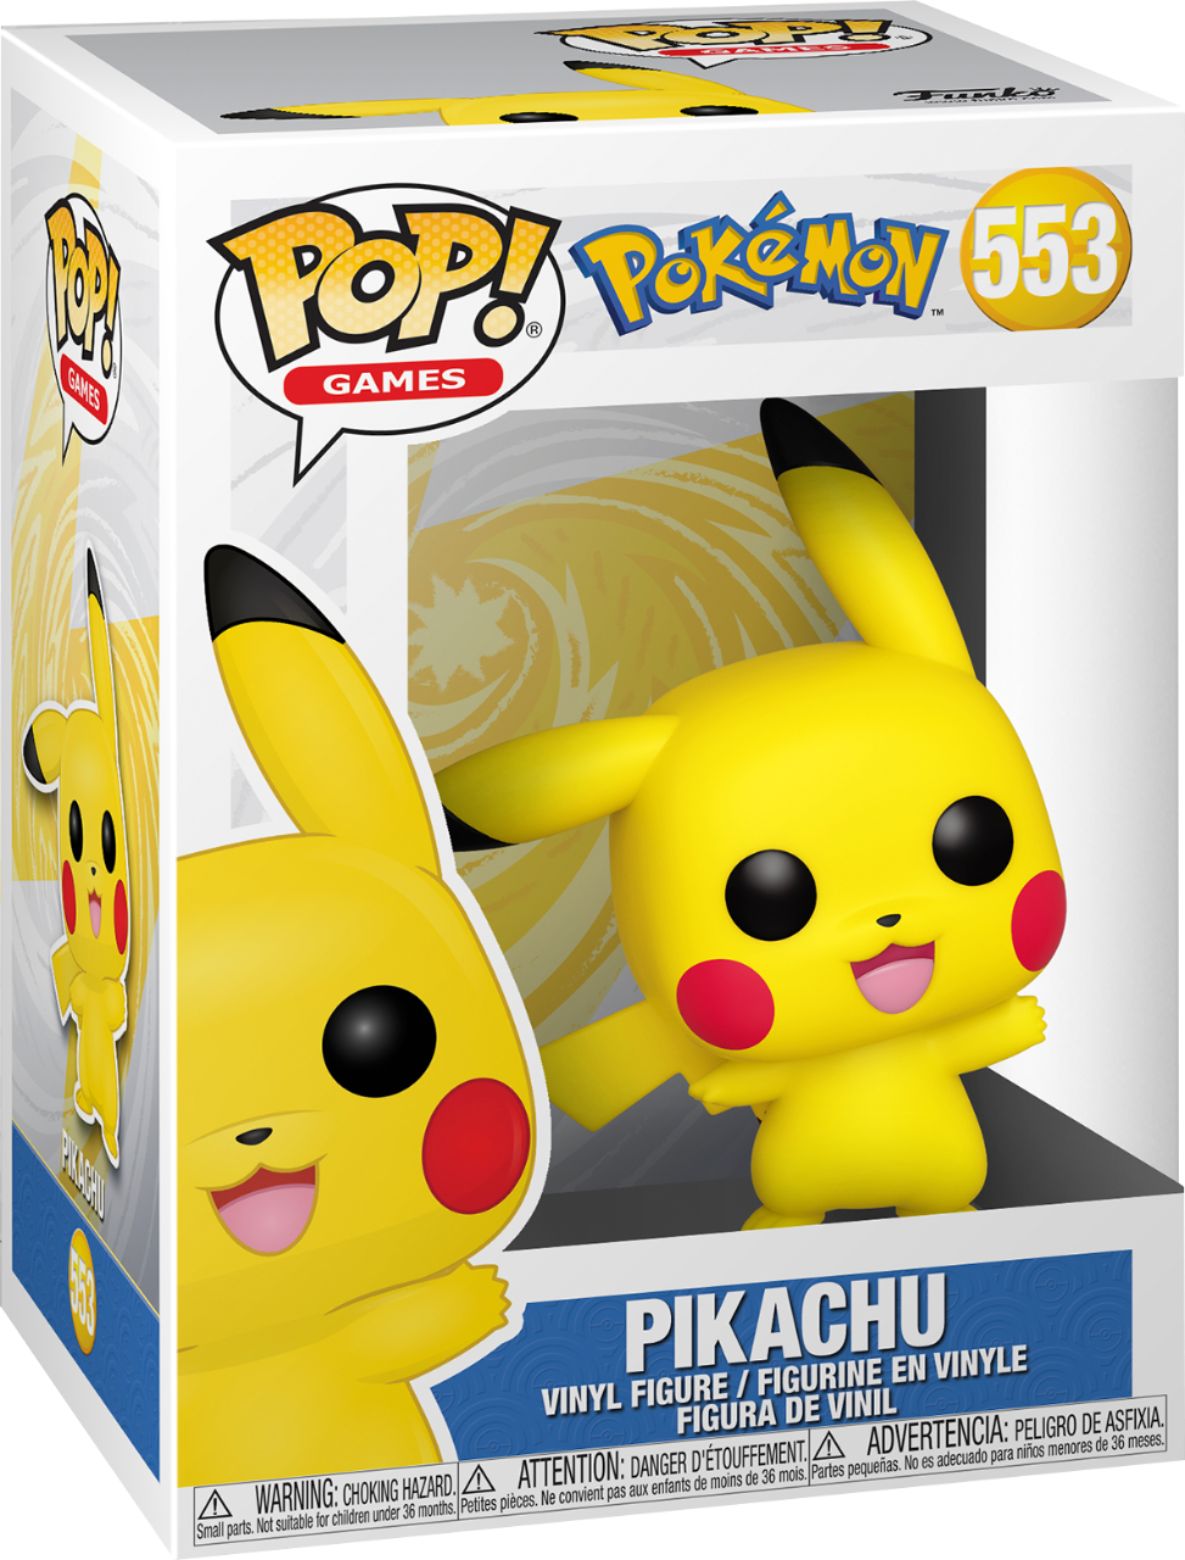 Funko POP! Animation: Pokémon Pikachu 43263 - Best Buy